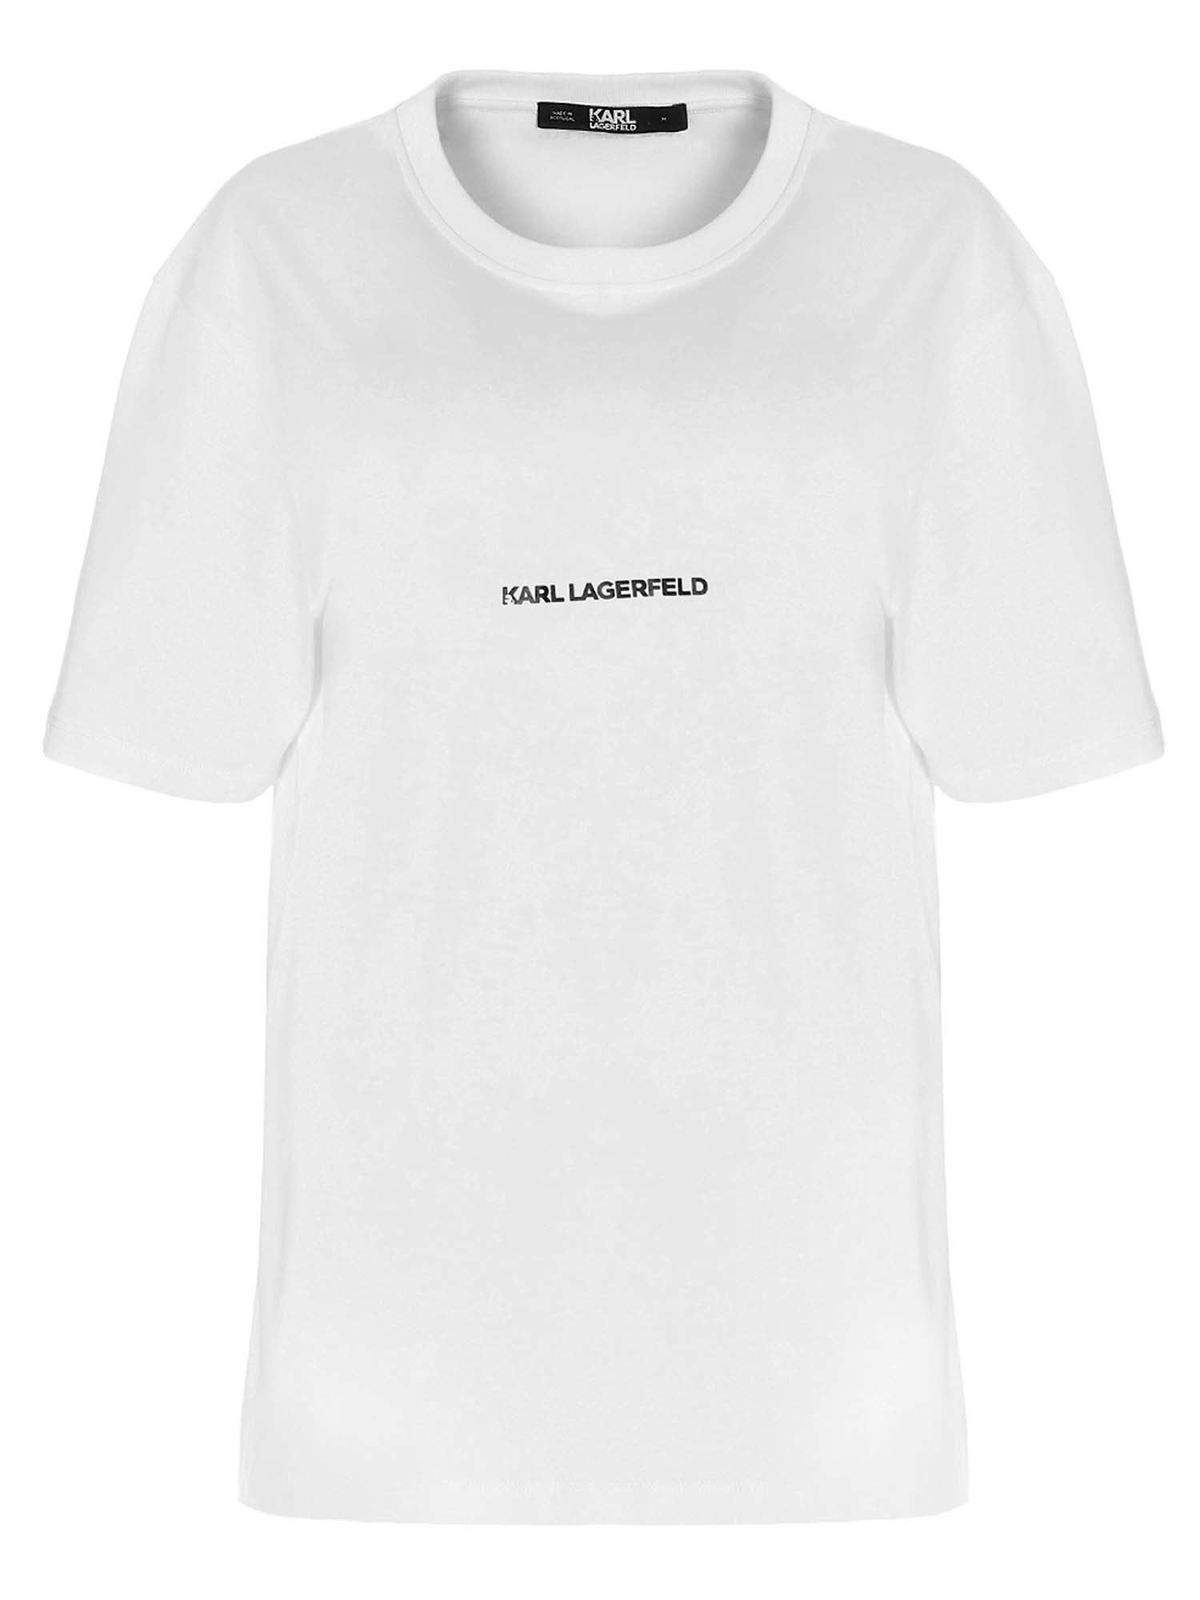 KARL LAGERFELD LOGO PRINT T-SHIRT IN WHITE